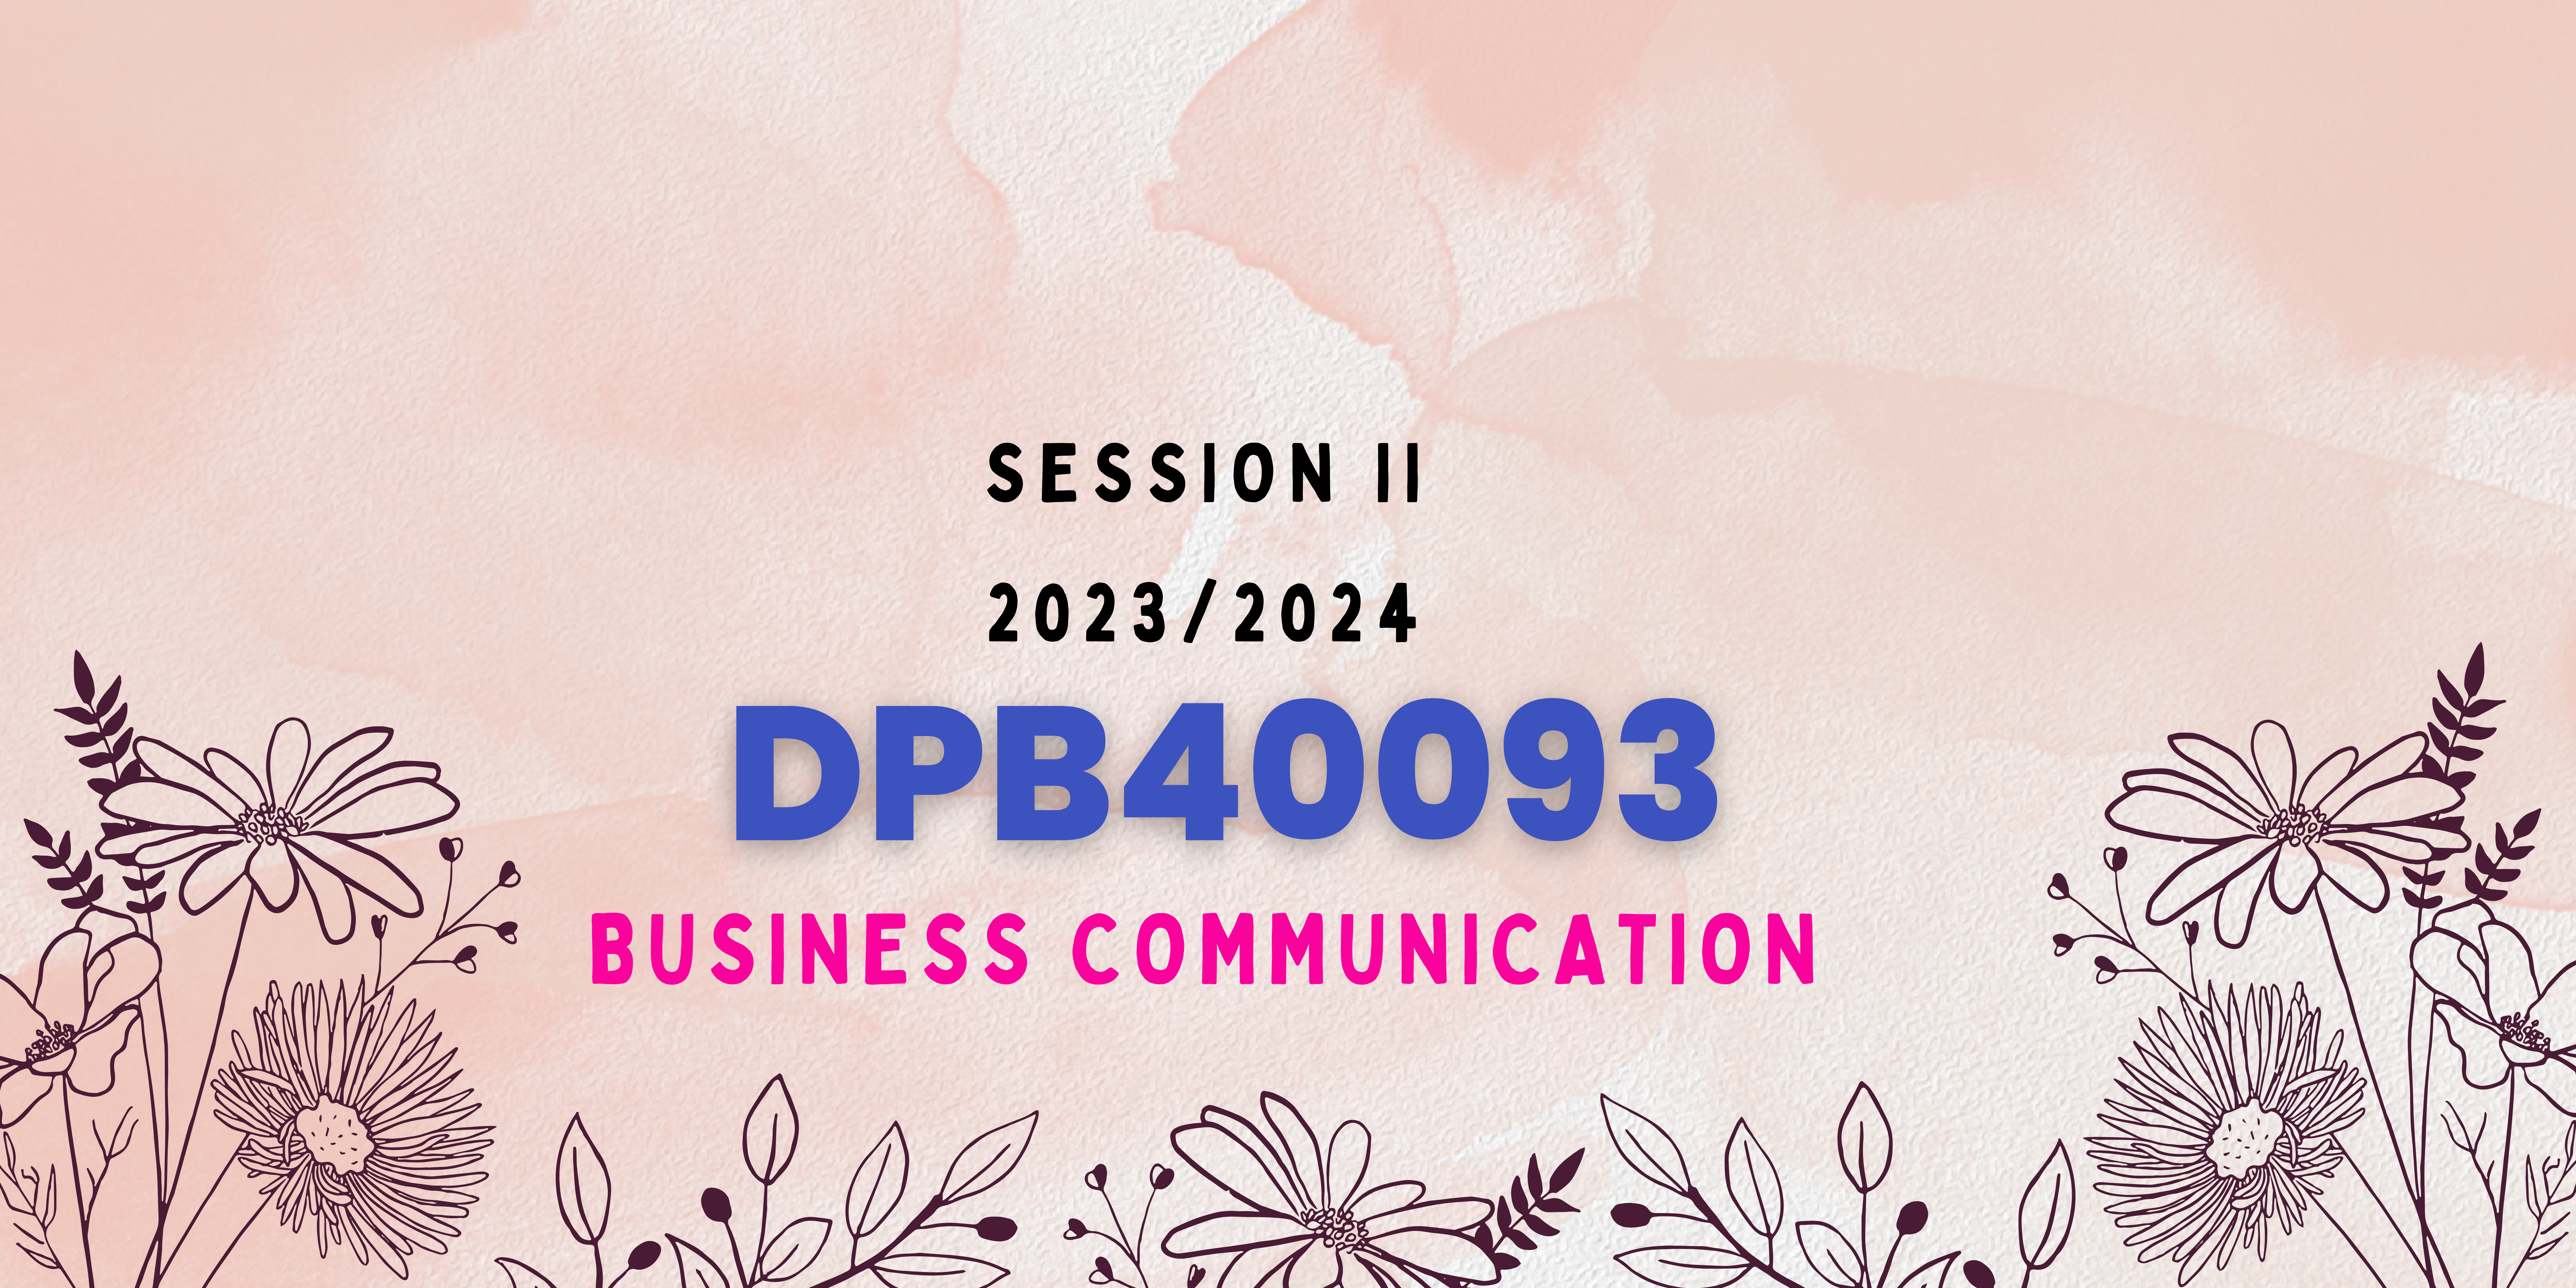  DPB40093 BUSINESS COMMUNICATION SESI II 2023/2024